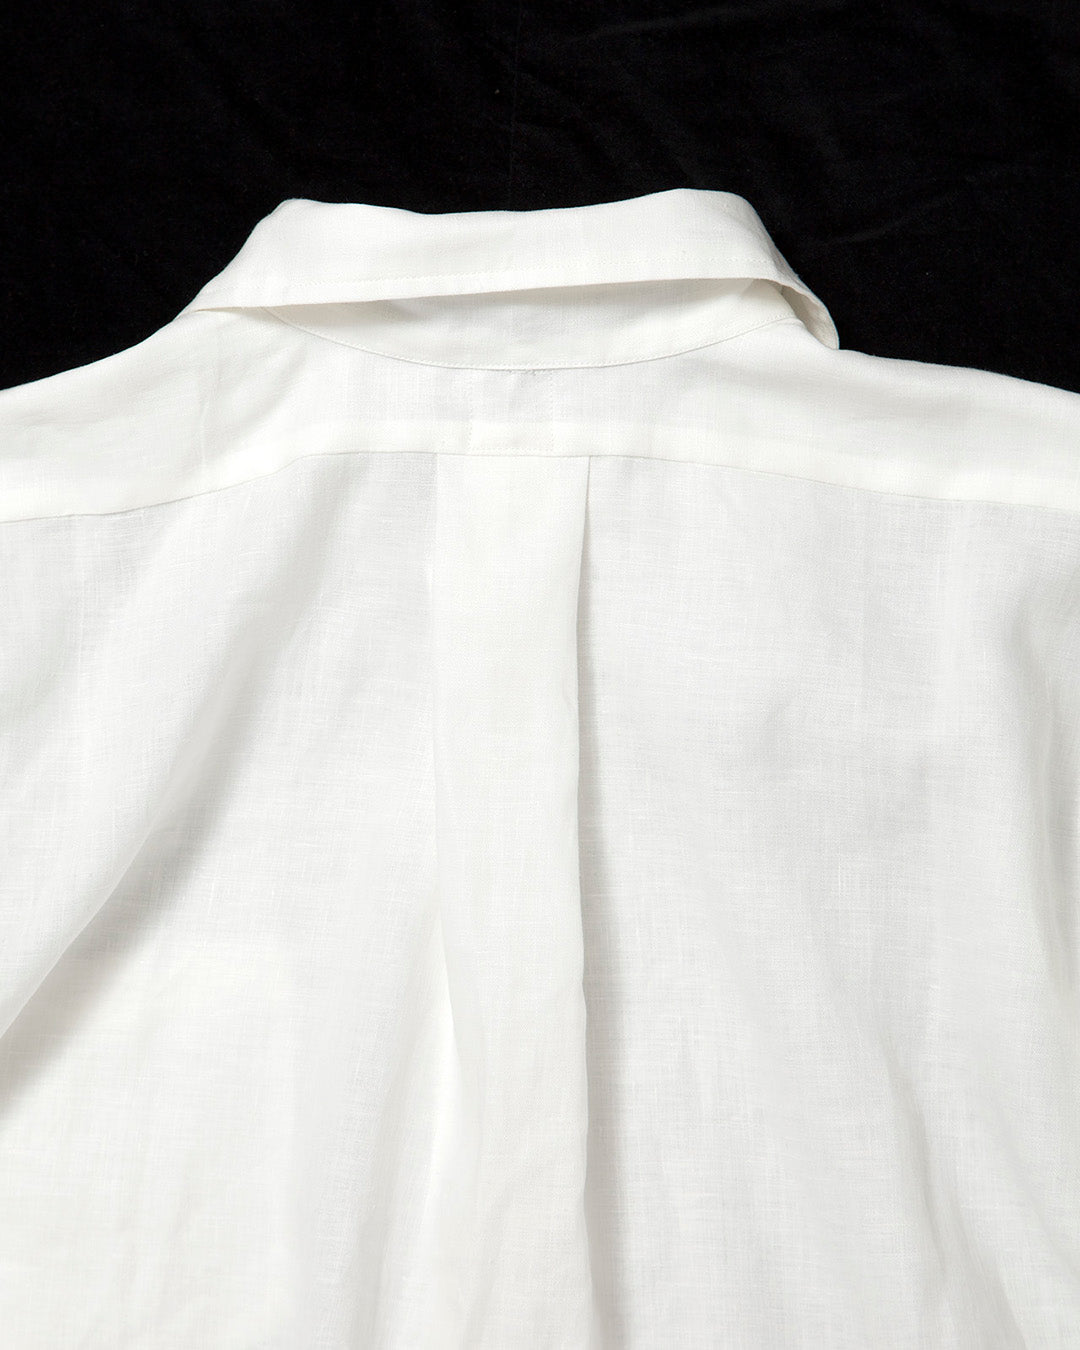 THE CORONA UTILITY - CS006・White Collar Work Shirt / White